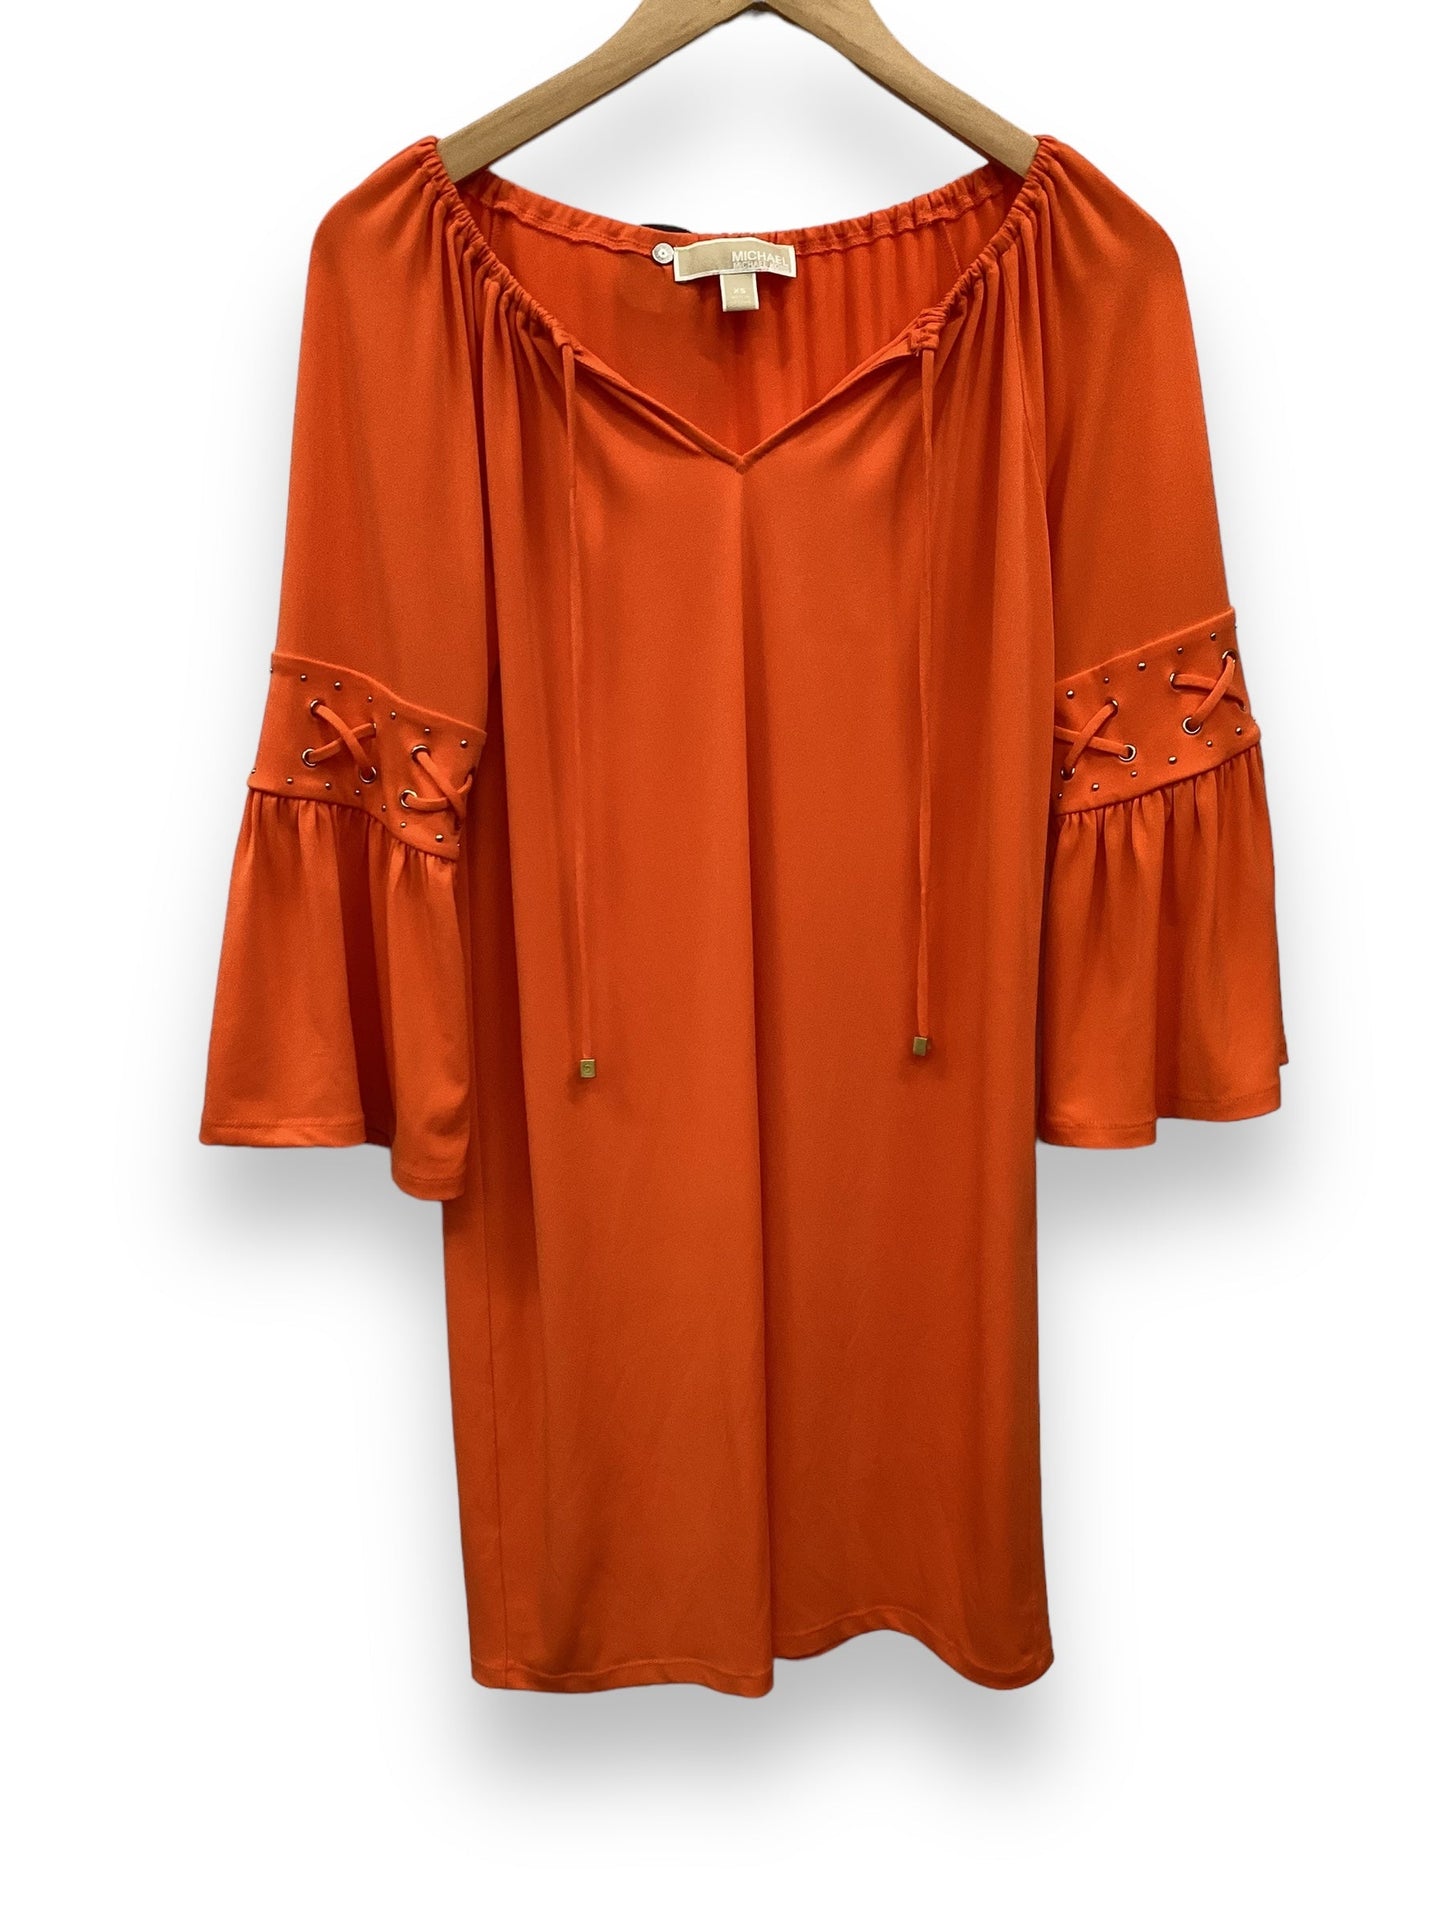 Orange Dress Designer Michael Kors, Size Xs